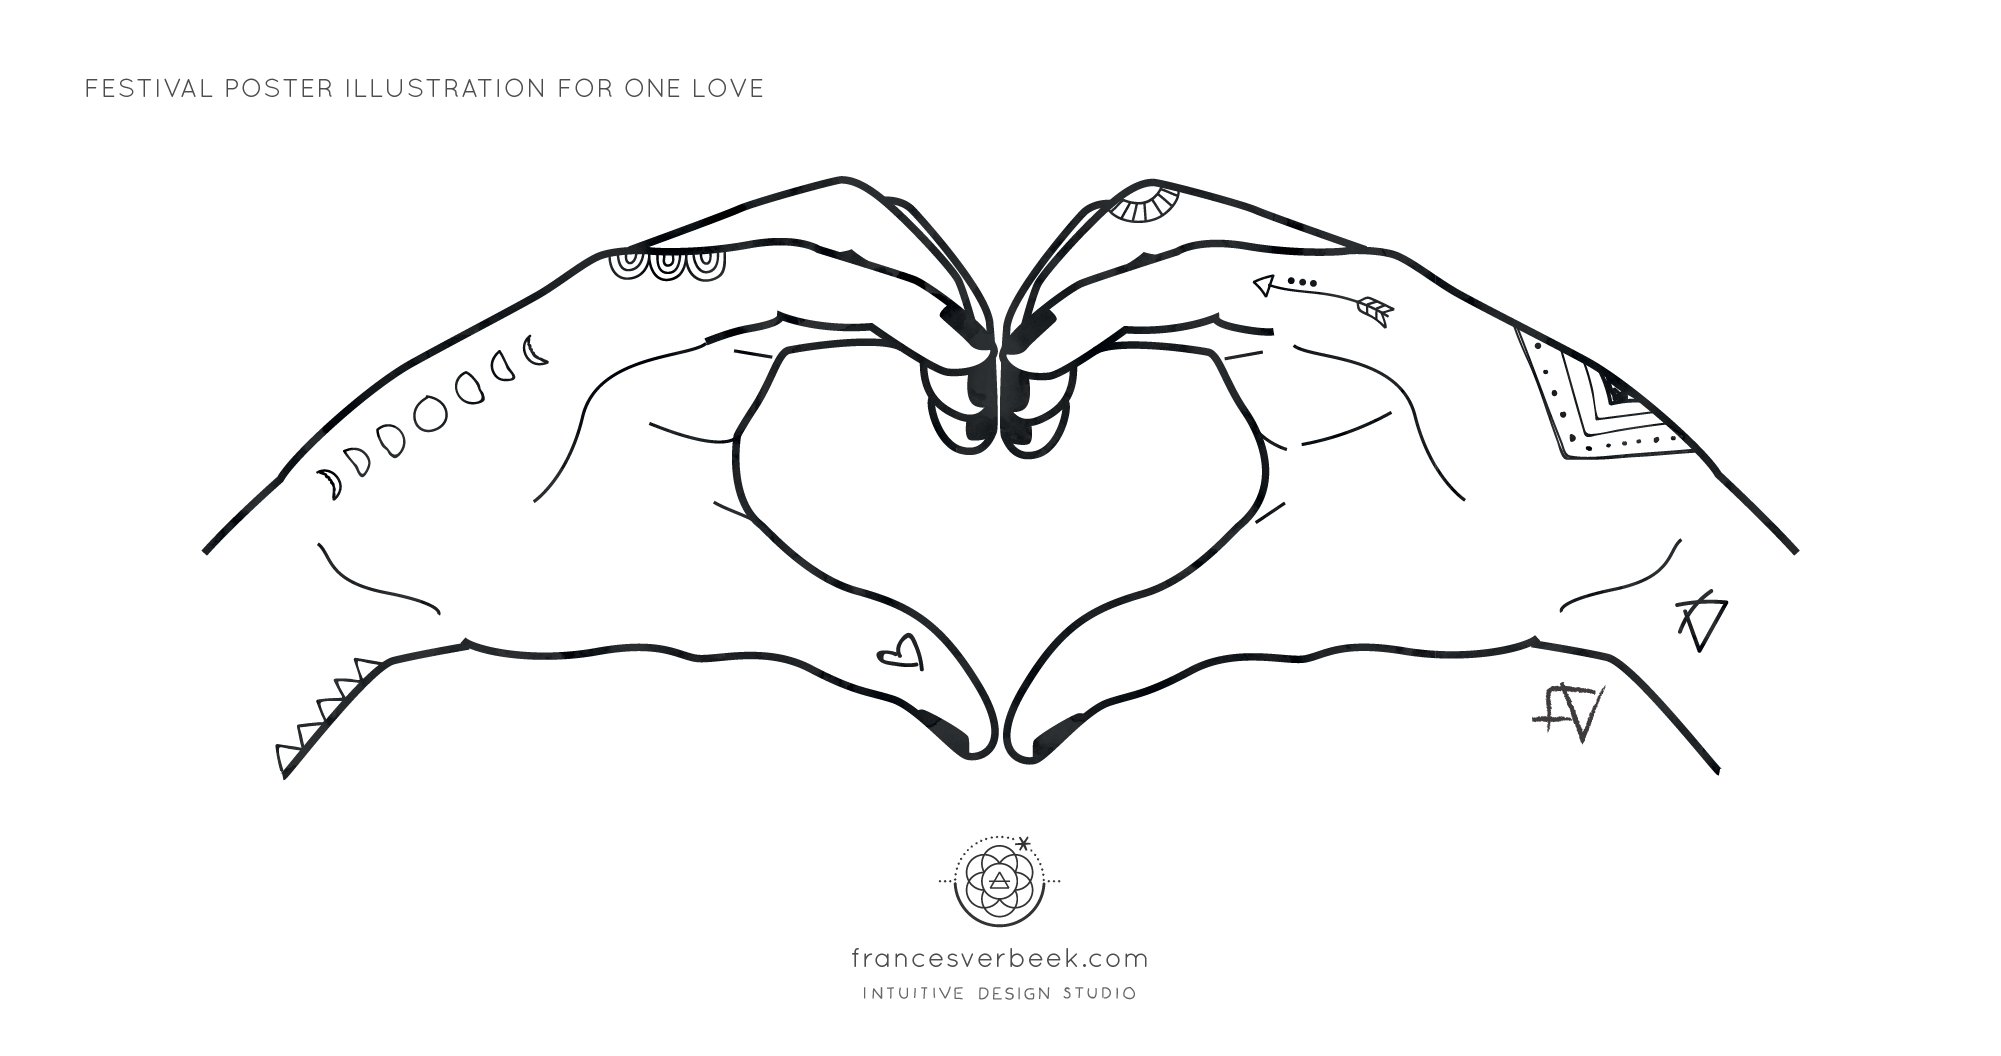 one love festival illustration by Frances Verbeek